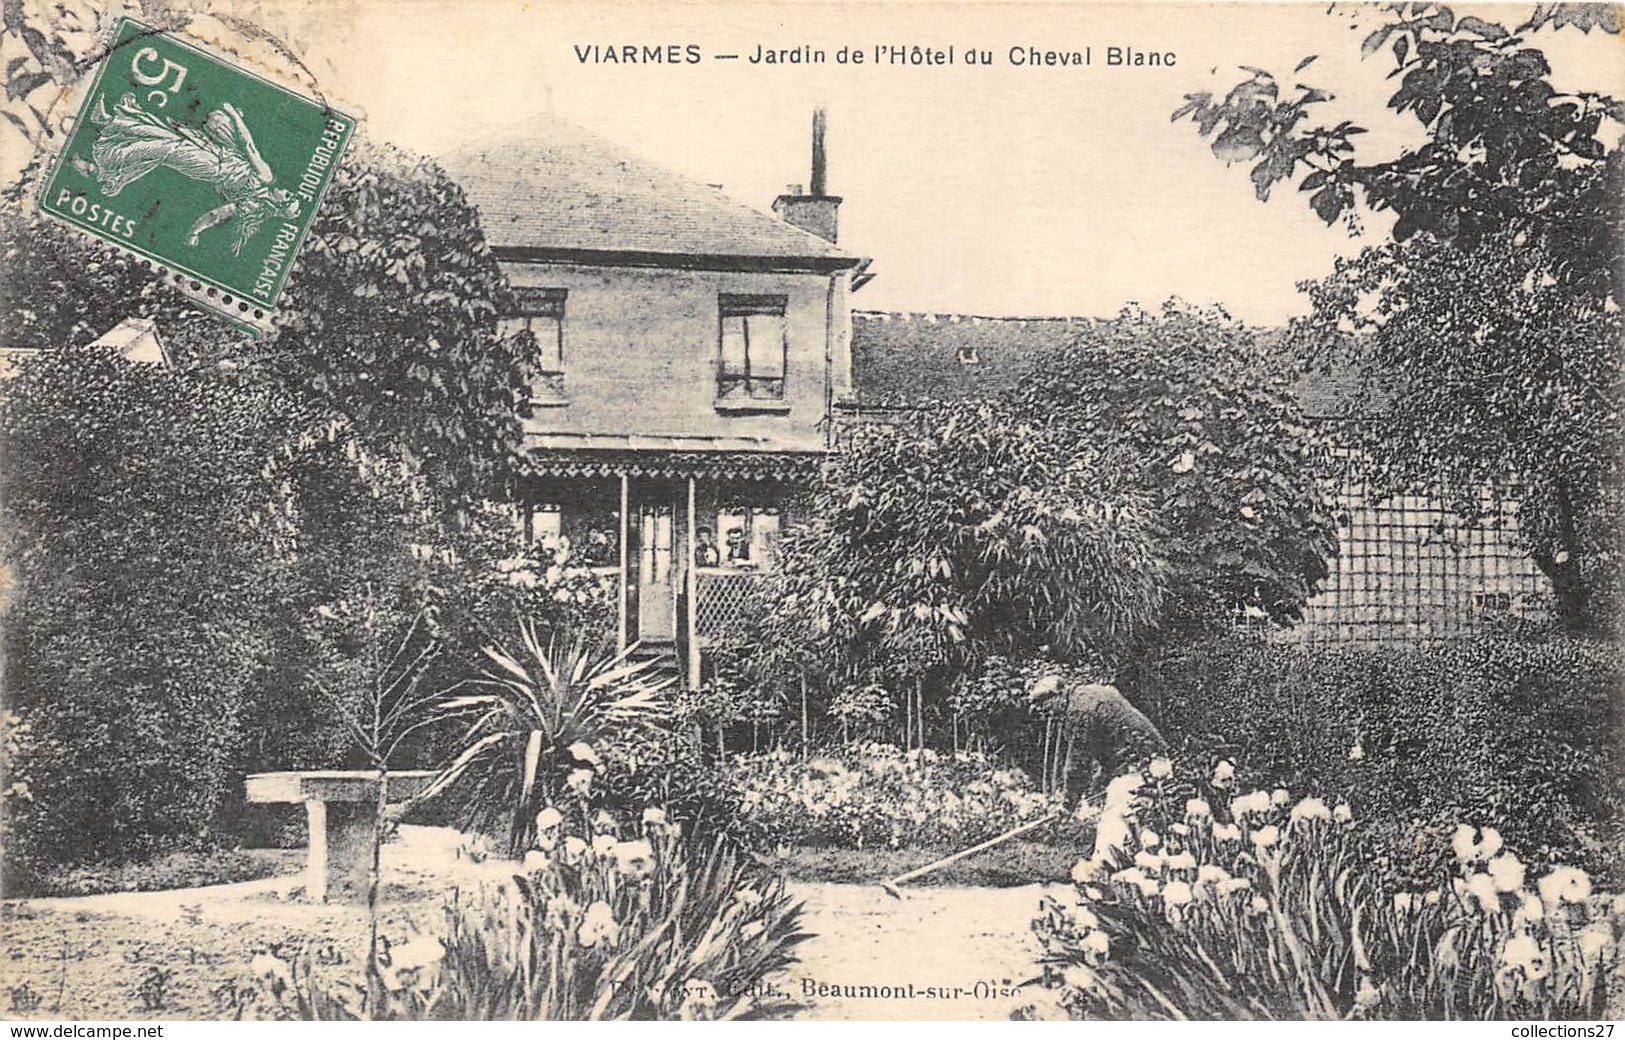 95-VIARMES-JARDIN DE L'HÔTEL DU CHEVAL BLANC - Viarmes